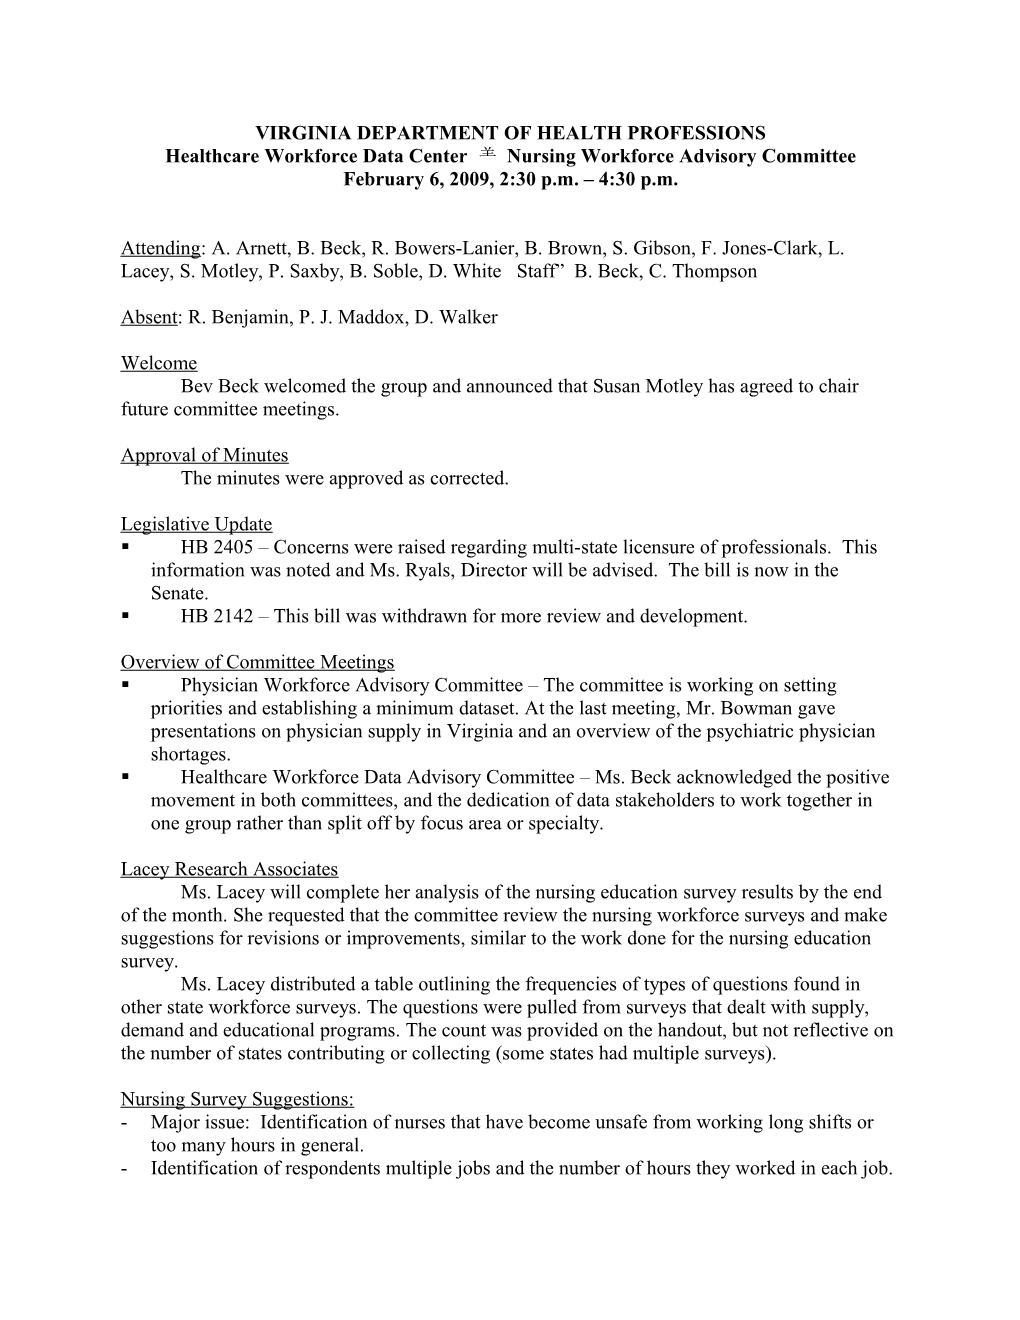 Workforce Advisory Committee Minutes 2-6-09